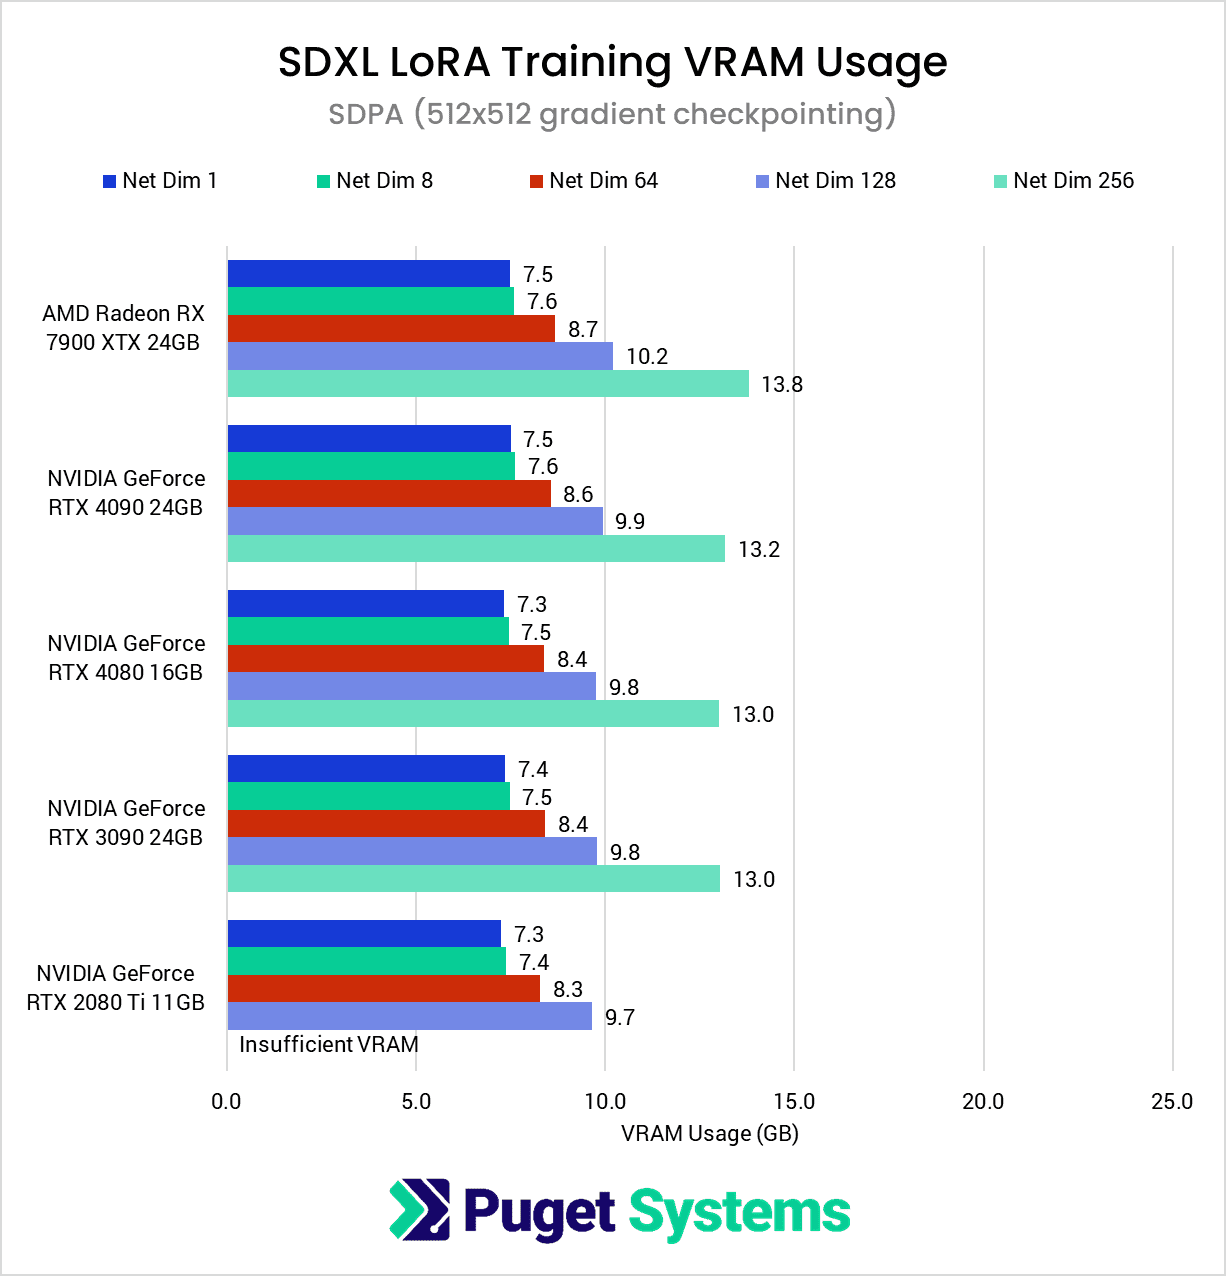 SDXL LoRA Training VRAM Usage - SDPA 512 gradient